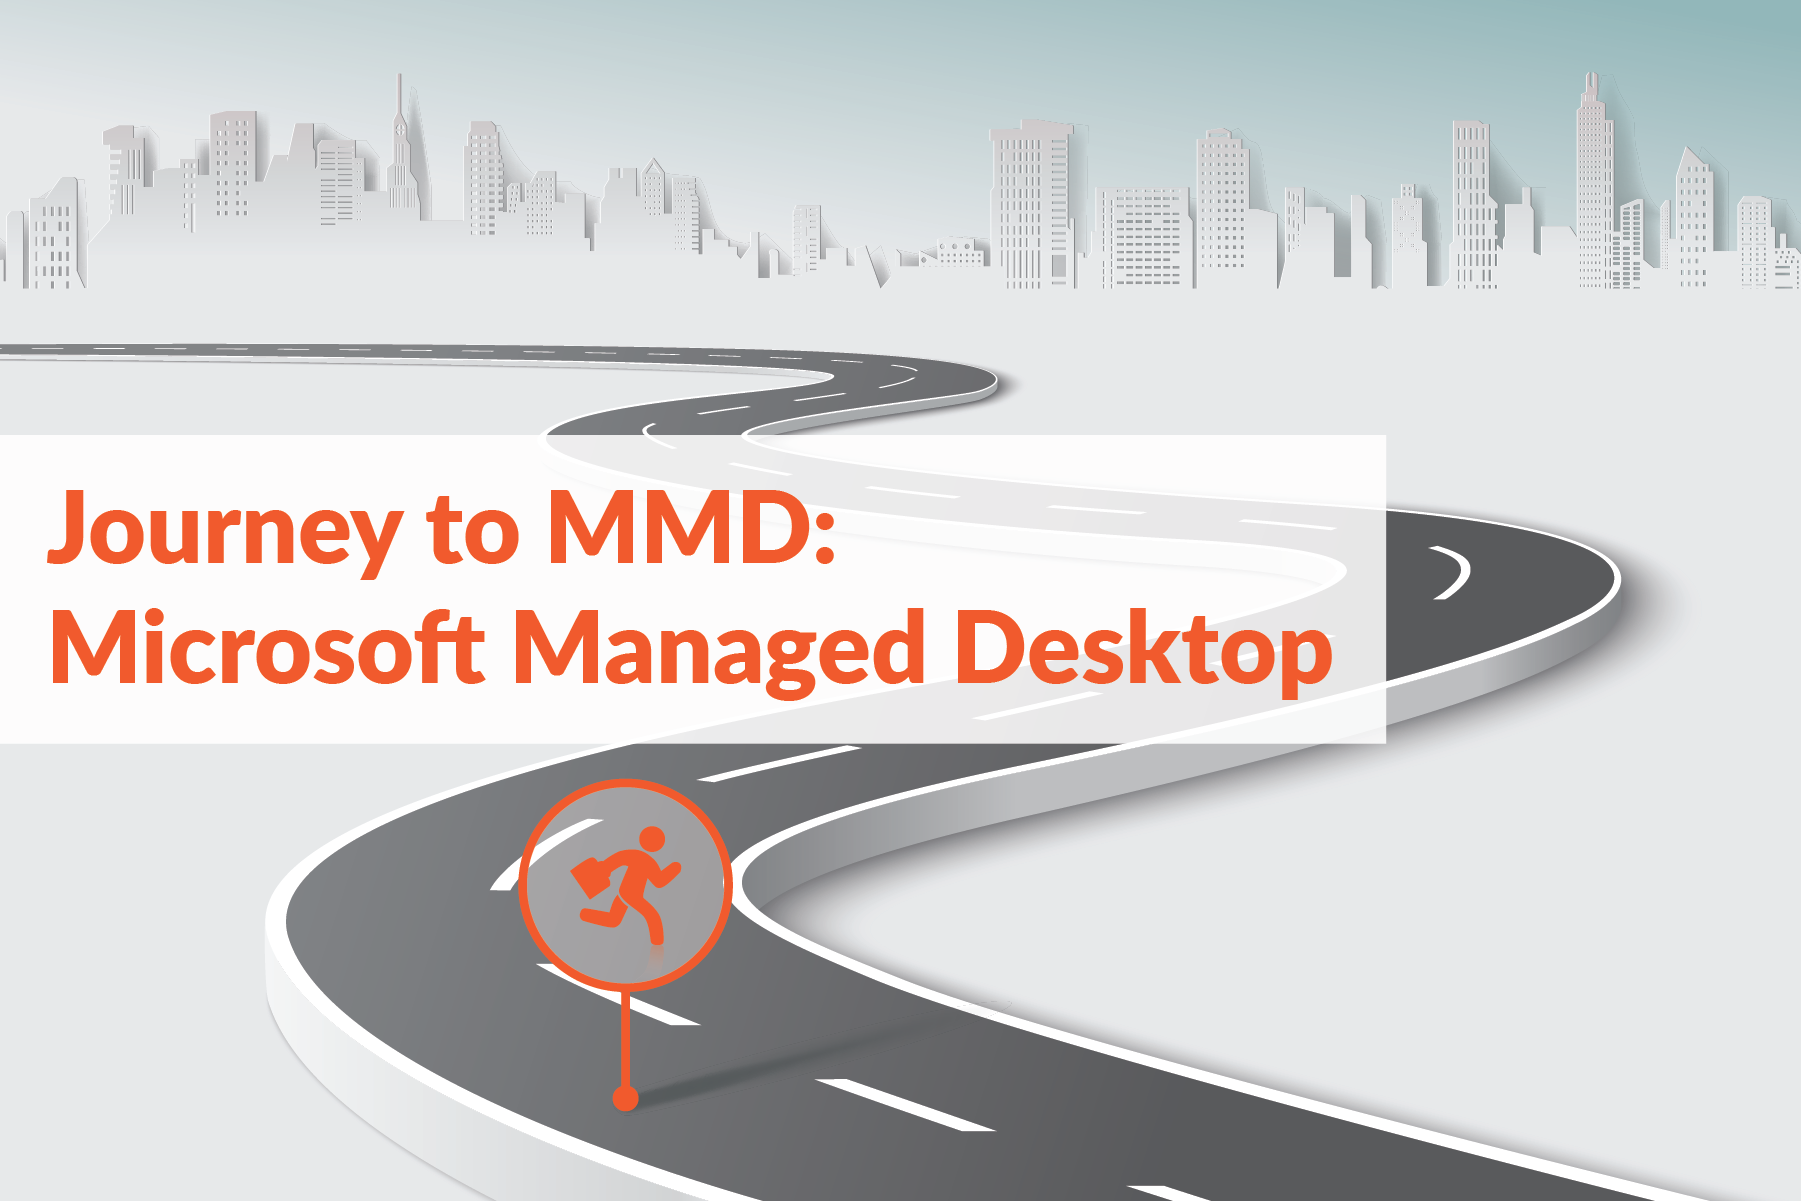 Journey to MMD: Microsoft Managed Desktop